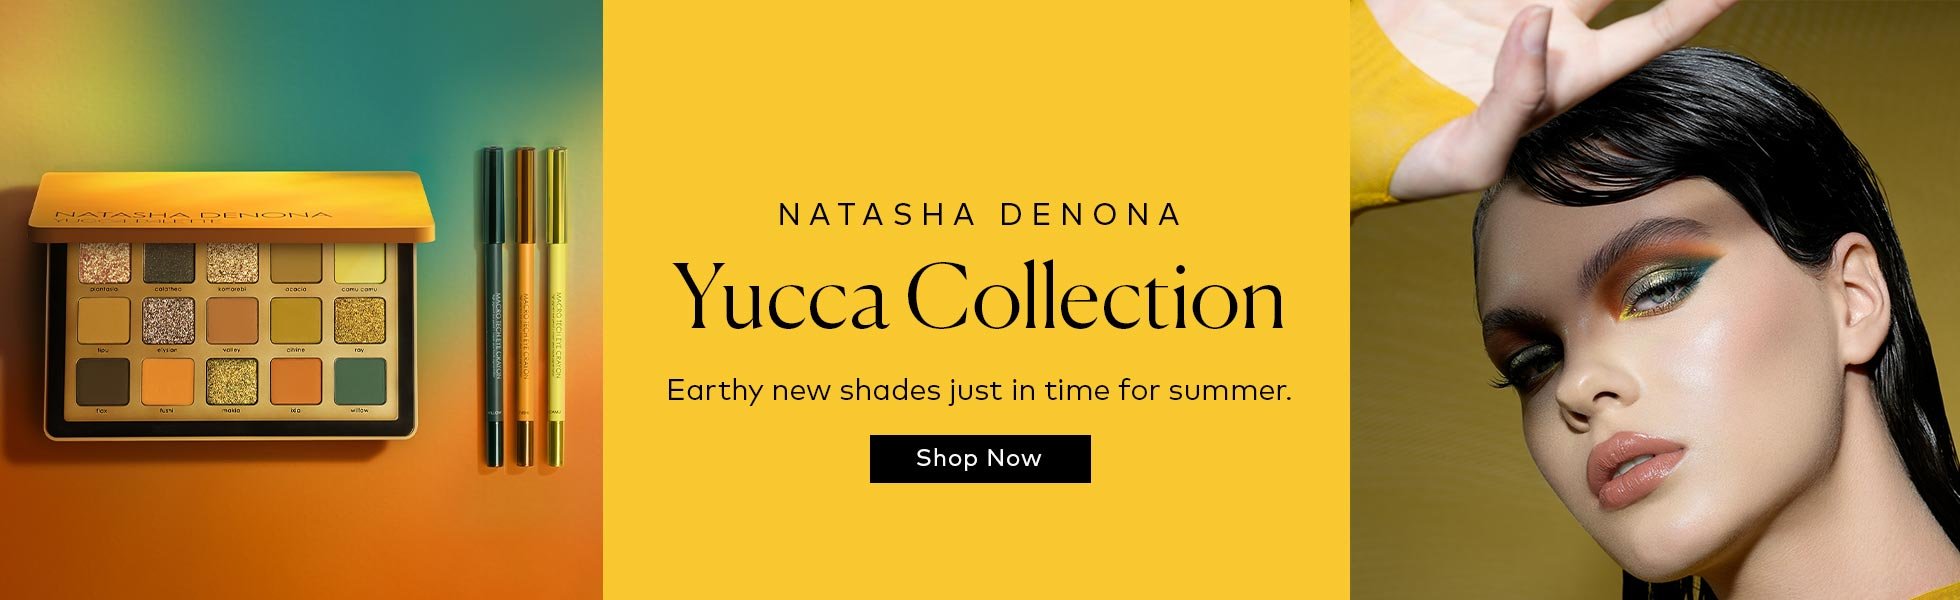 Shop the Natasha Denona Yucca Collection at Beautylish.com